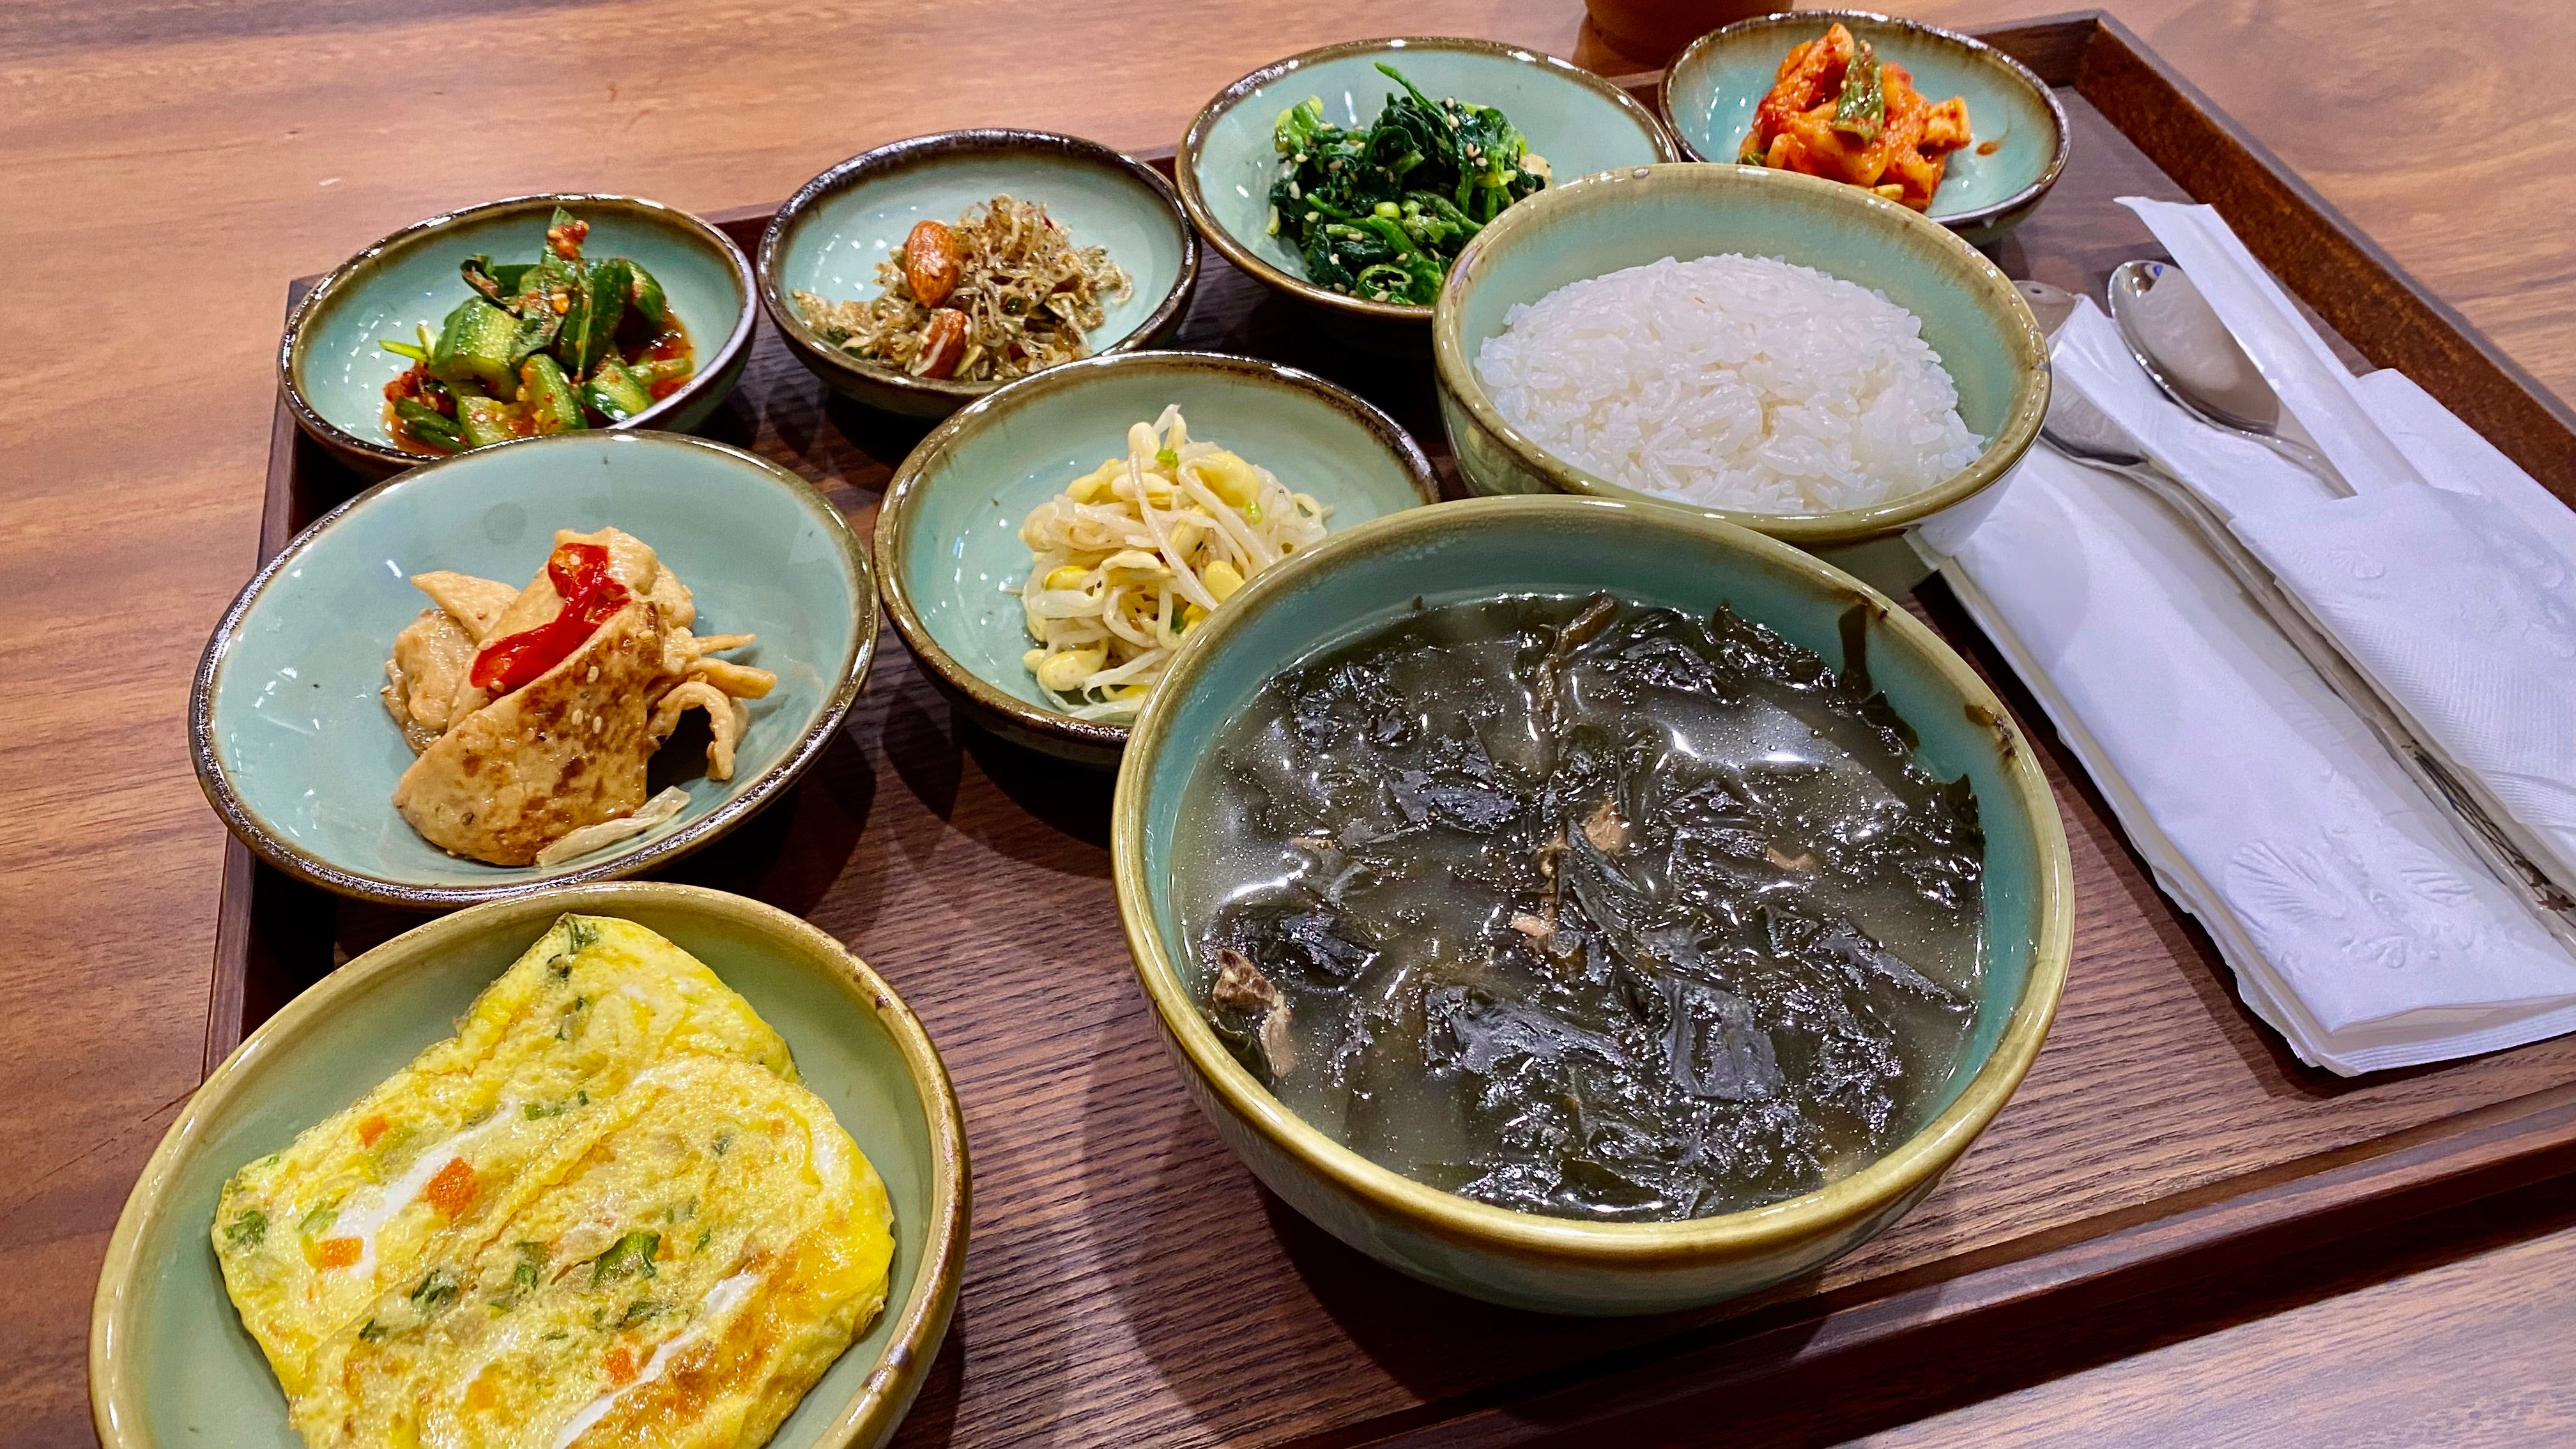 The Spa Hyu food